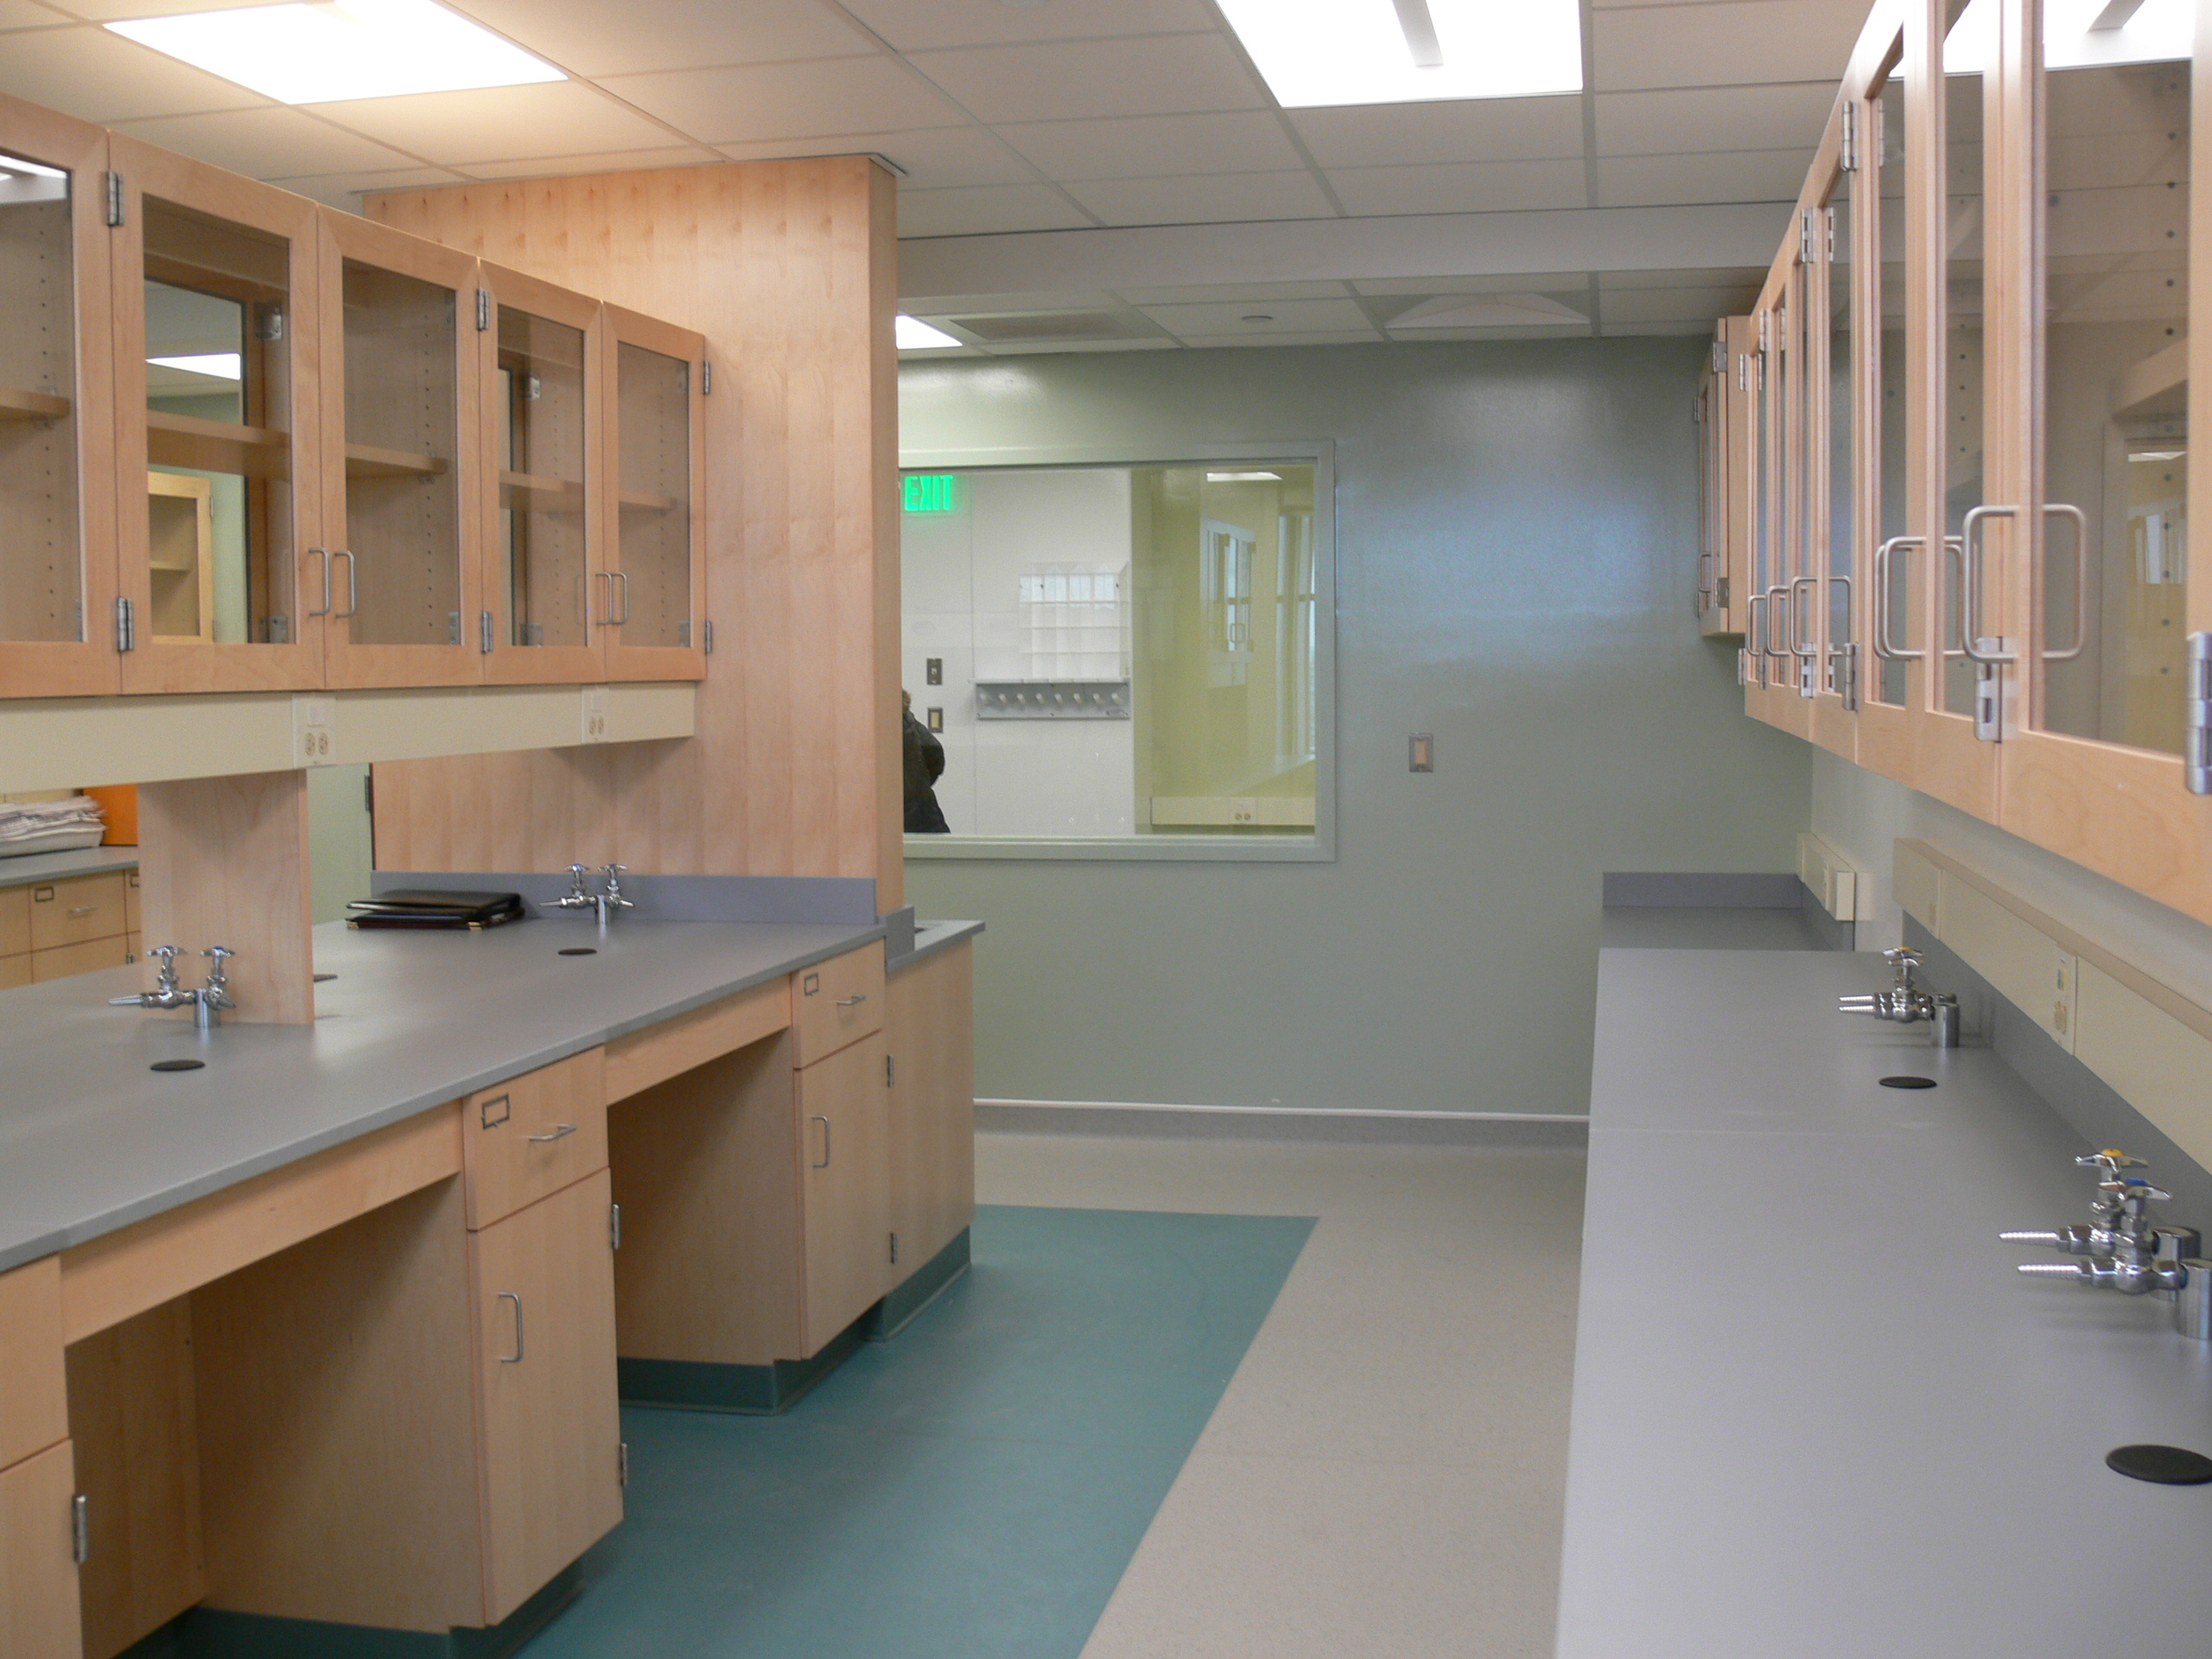 Interior, Genetics Research Lab at UMass Lowell, storage, work stations, equipment